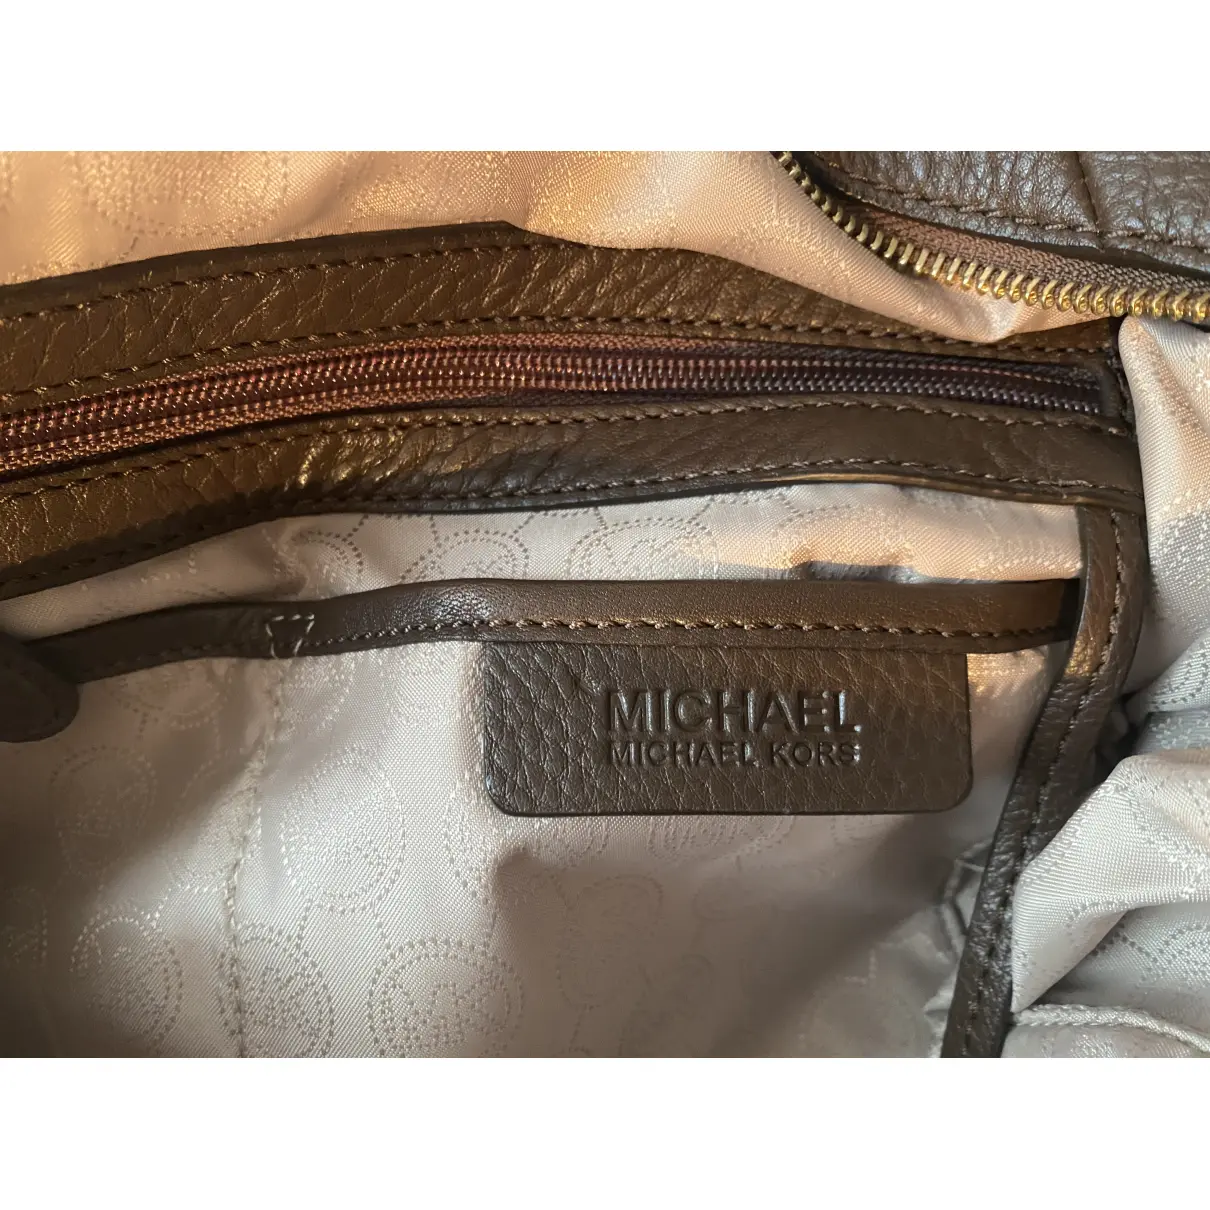 Bedford leather handbag Michael Kors